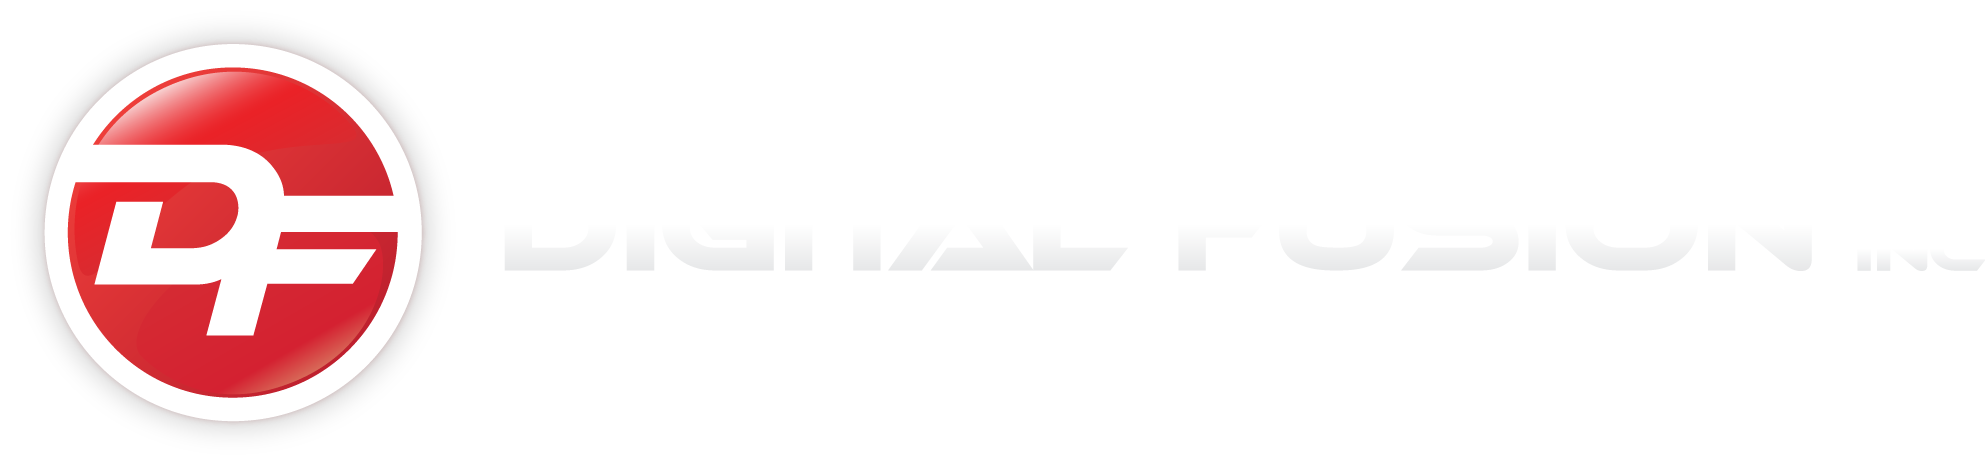 Digital Fusion Inc.